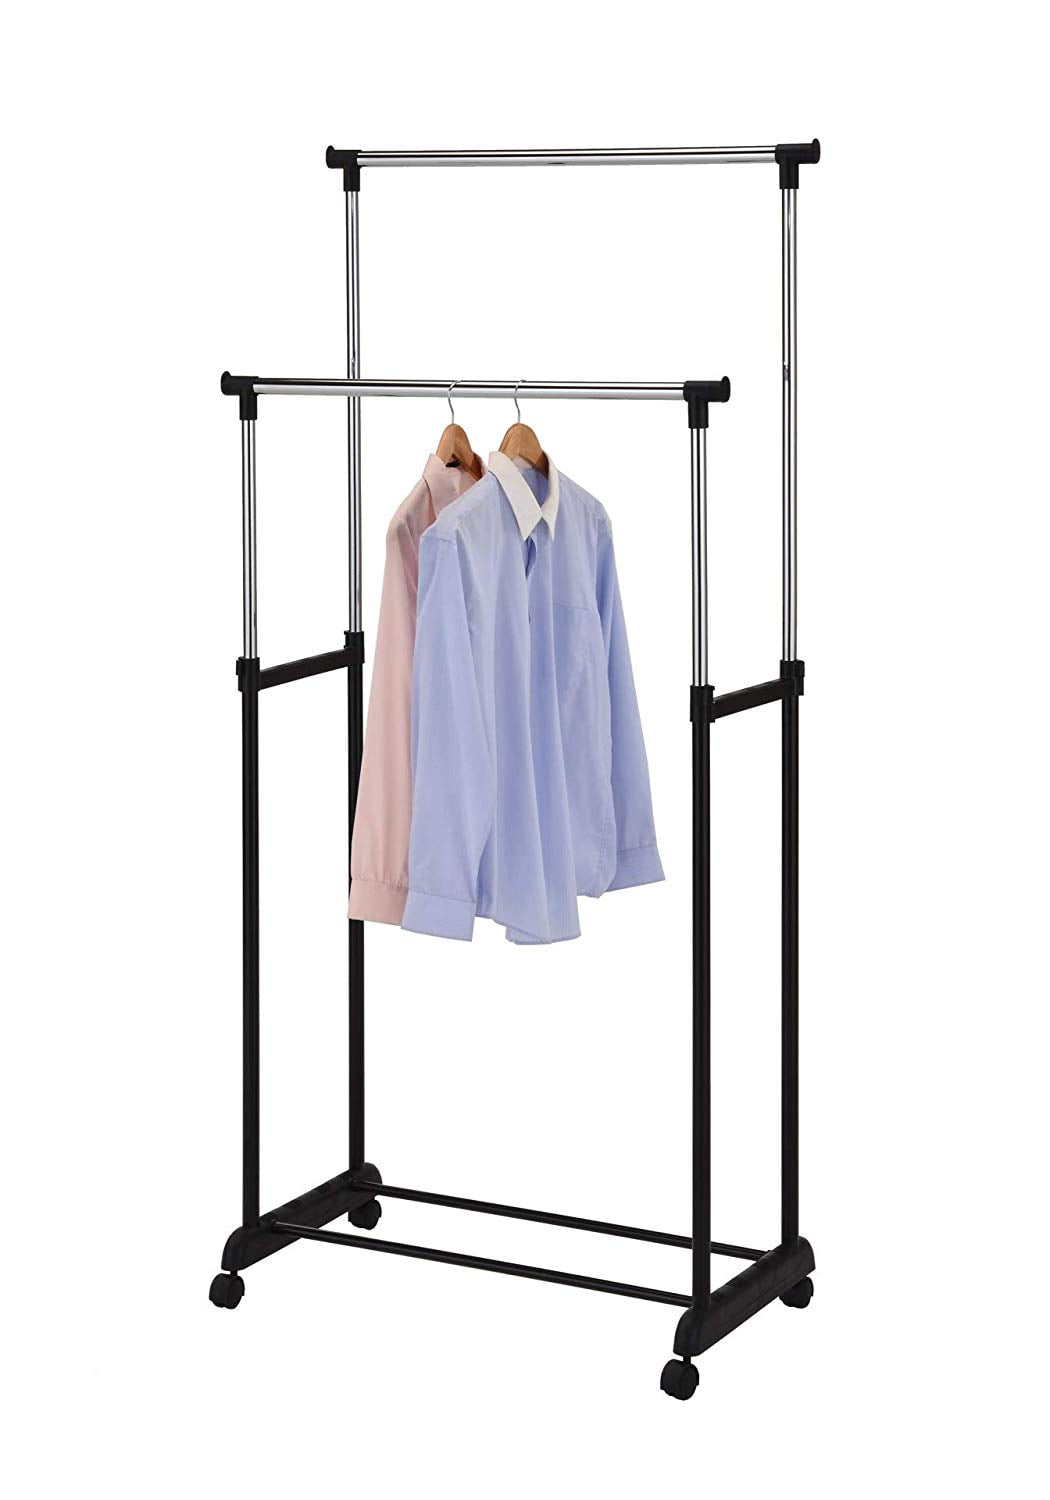 Details about   Rolling Adjustable Clothes Rack Double Bar Rail Hanging Garment Hanger B s e 101 